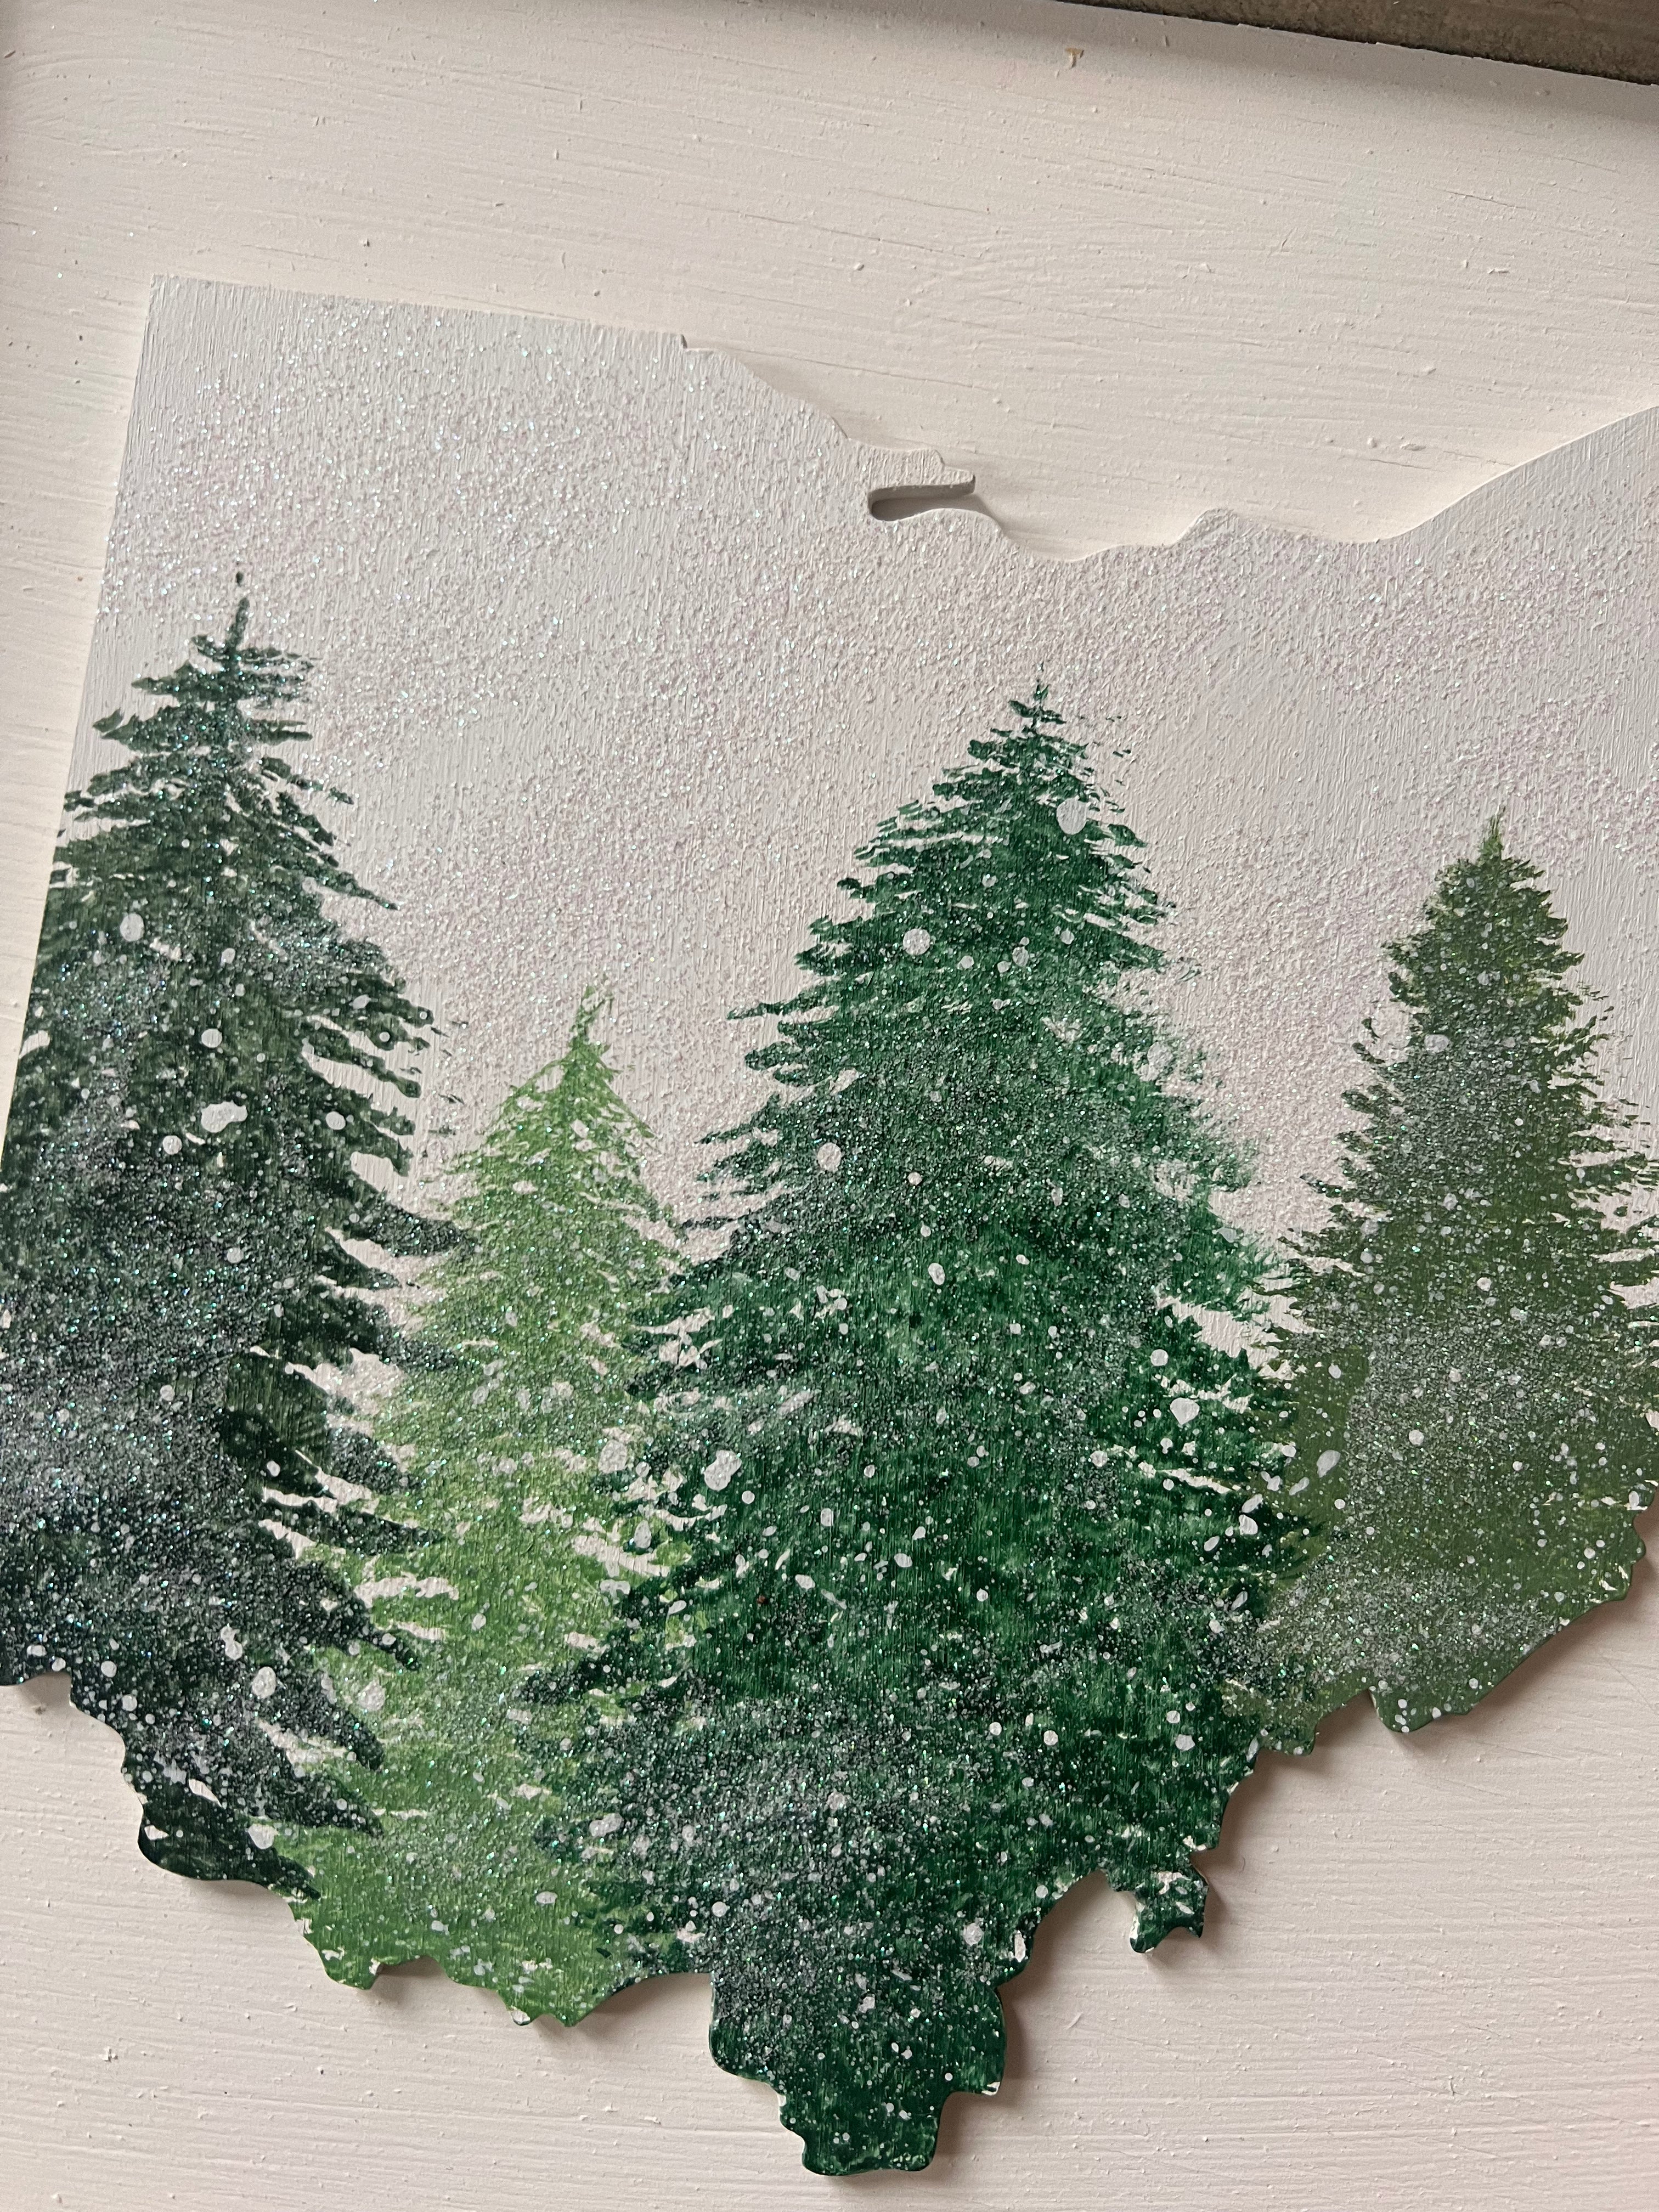 Painted Ohio Tree Series no. 1